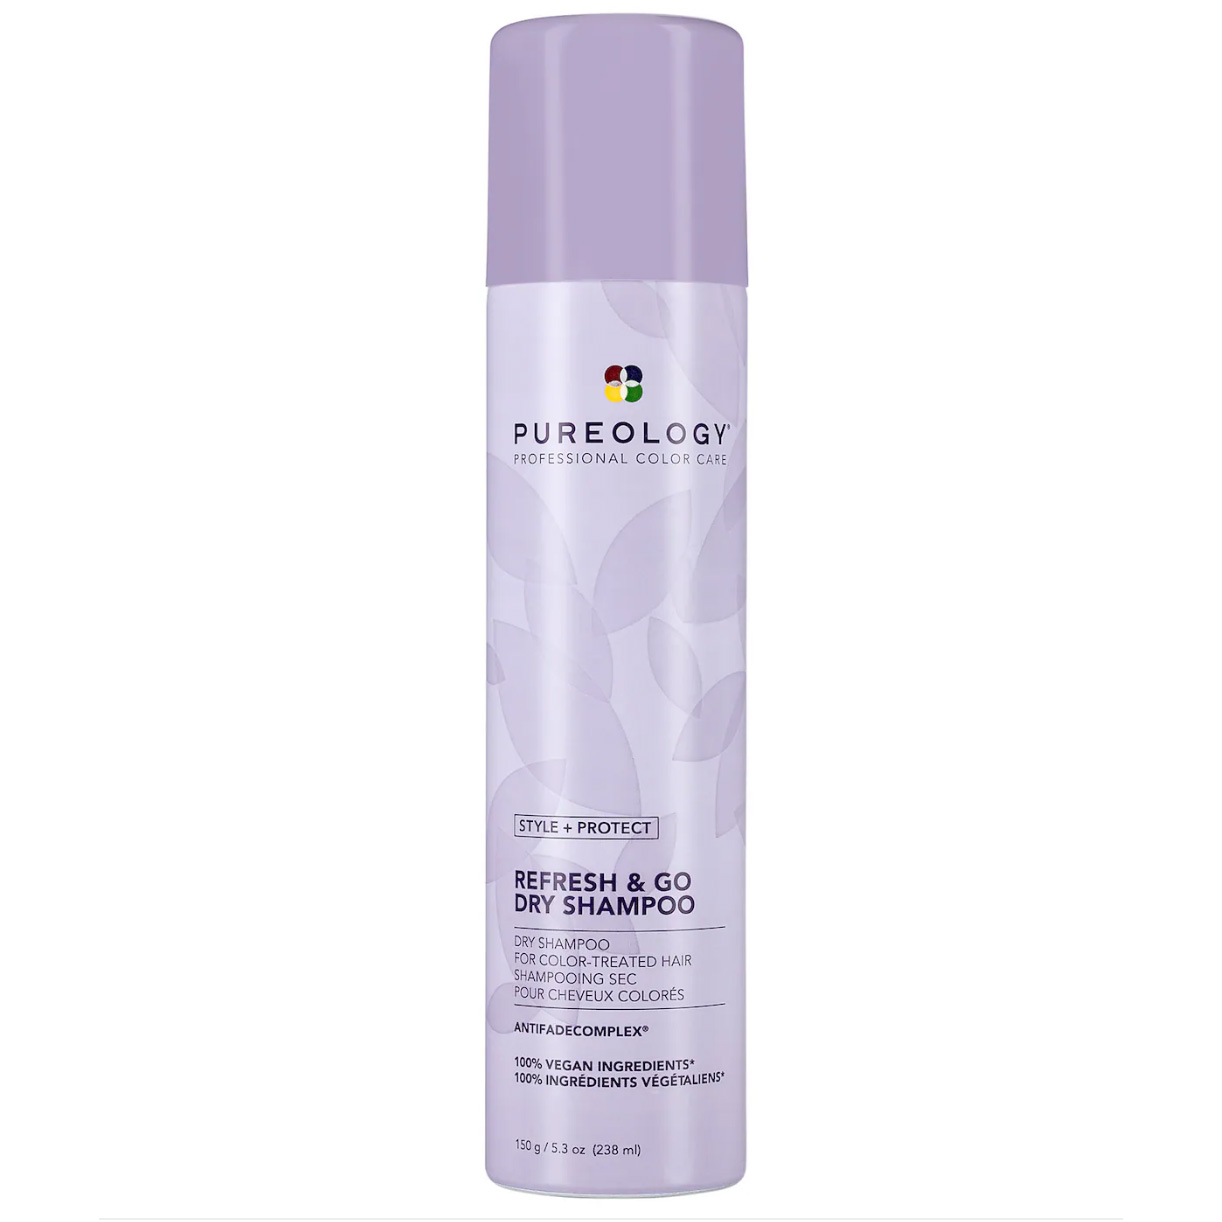 Pureology Dry Shampoo in purple aerosol bottle